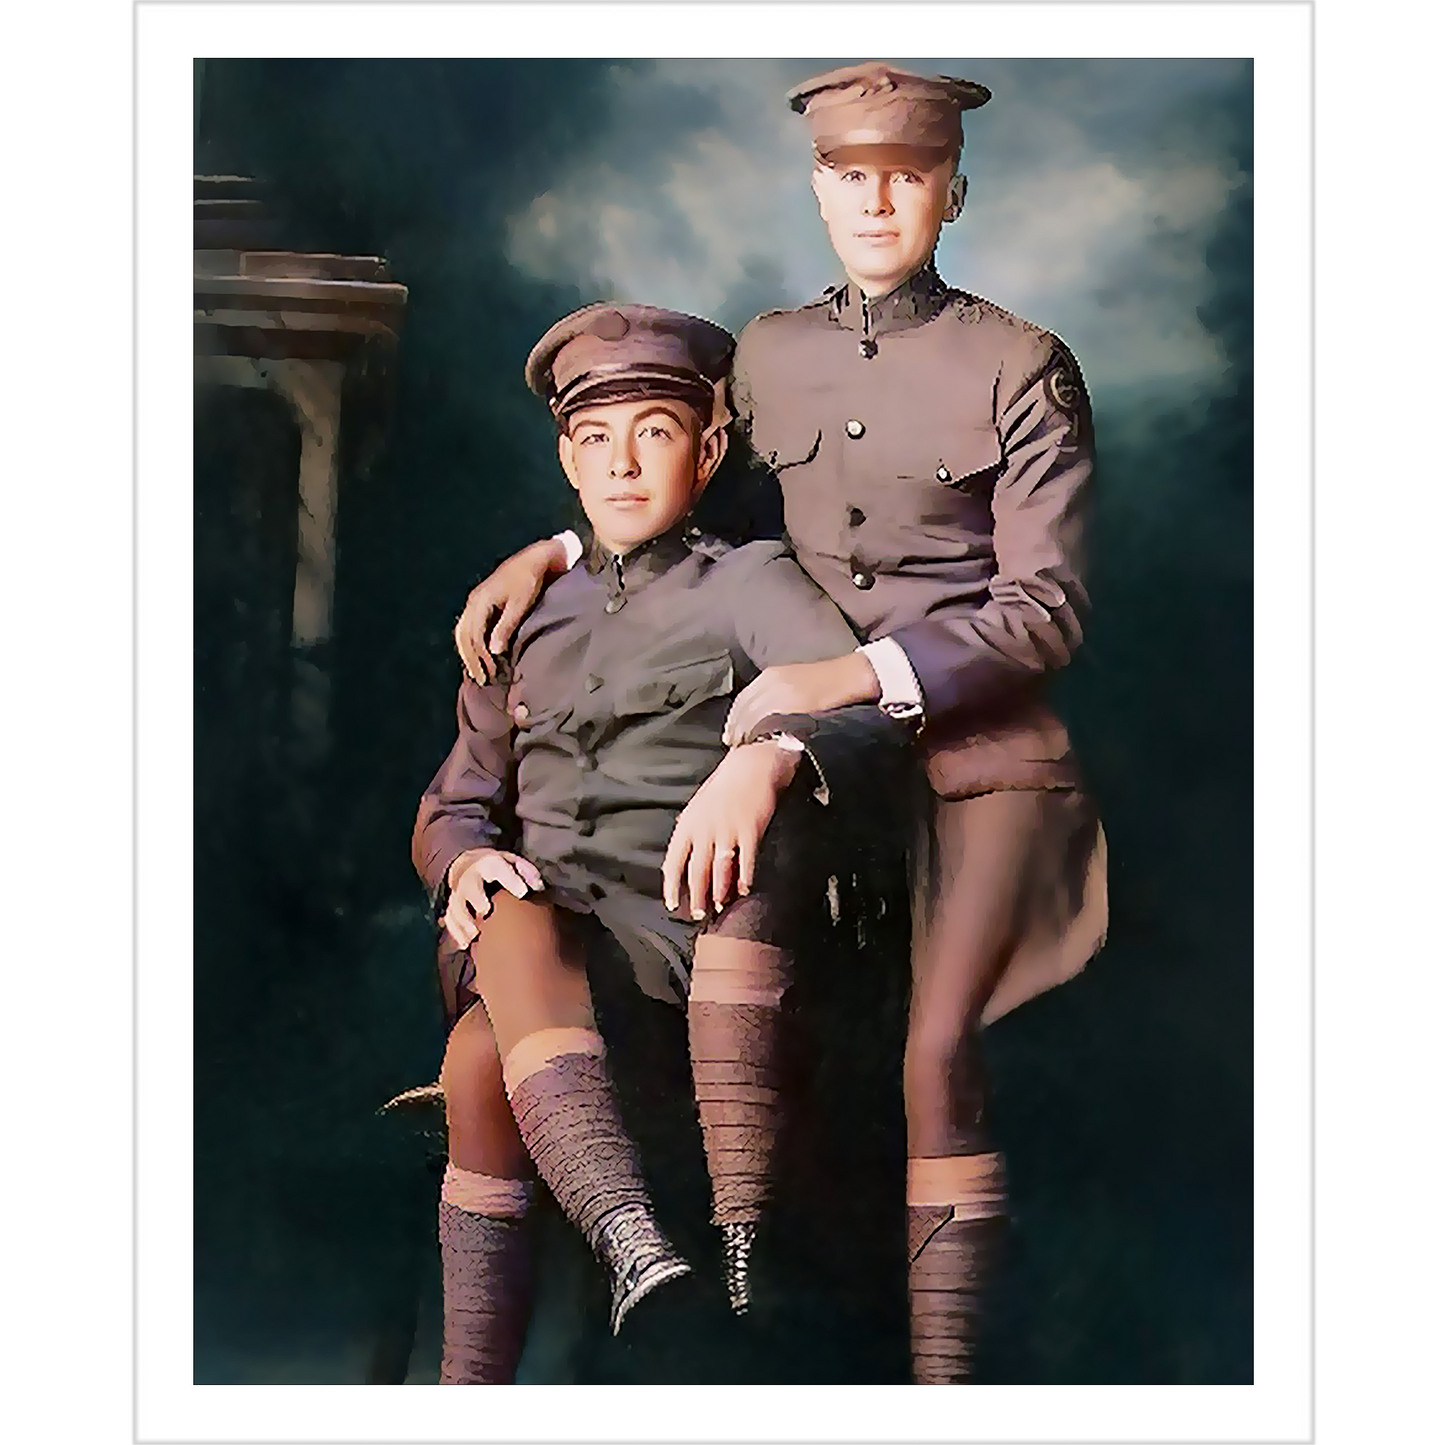 paire 001 | Giclee Artist Print Vintage Affectionate Men WWI Uniform Soldiers Marines Gay LGBTQ